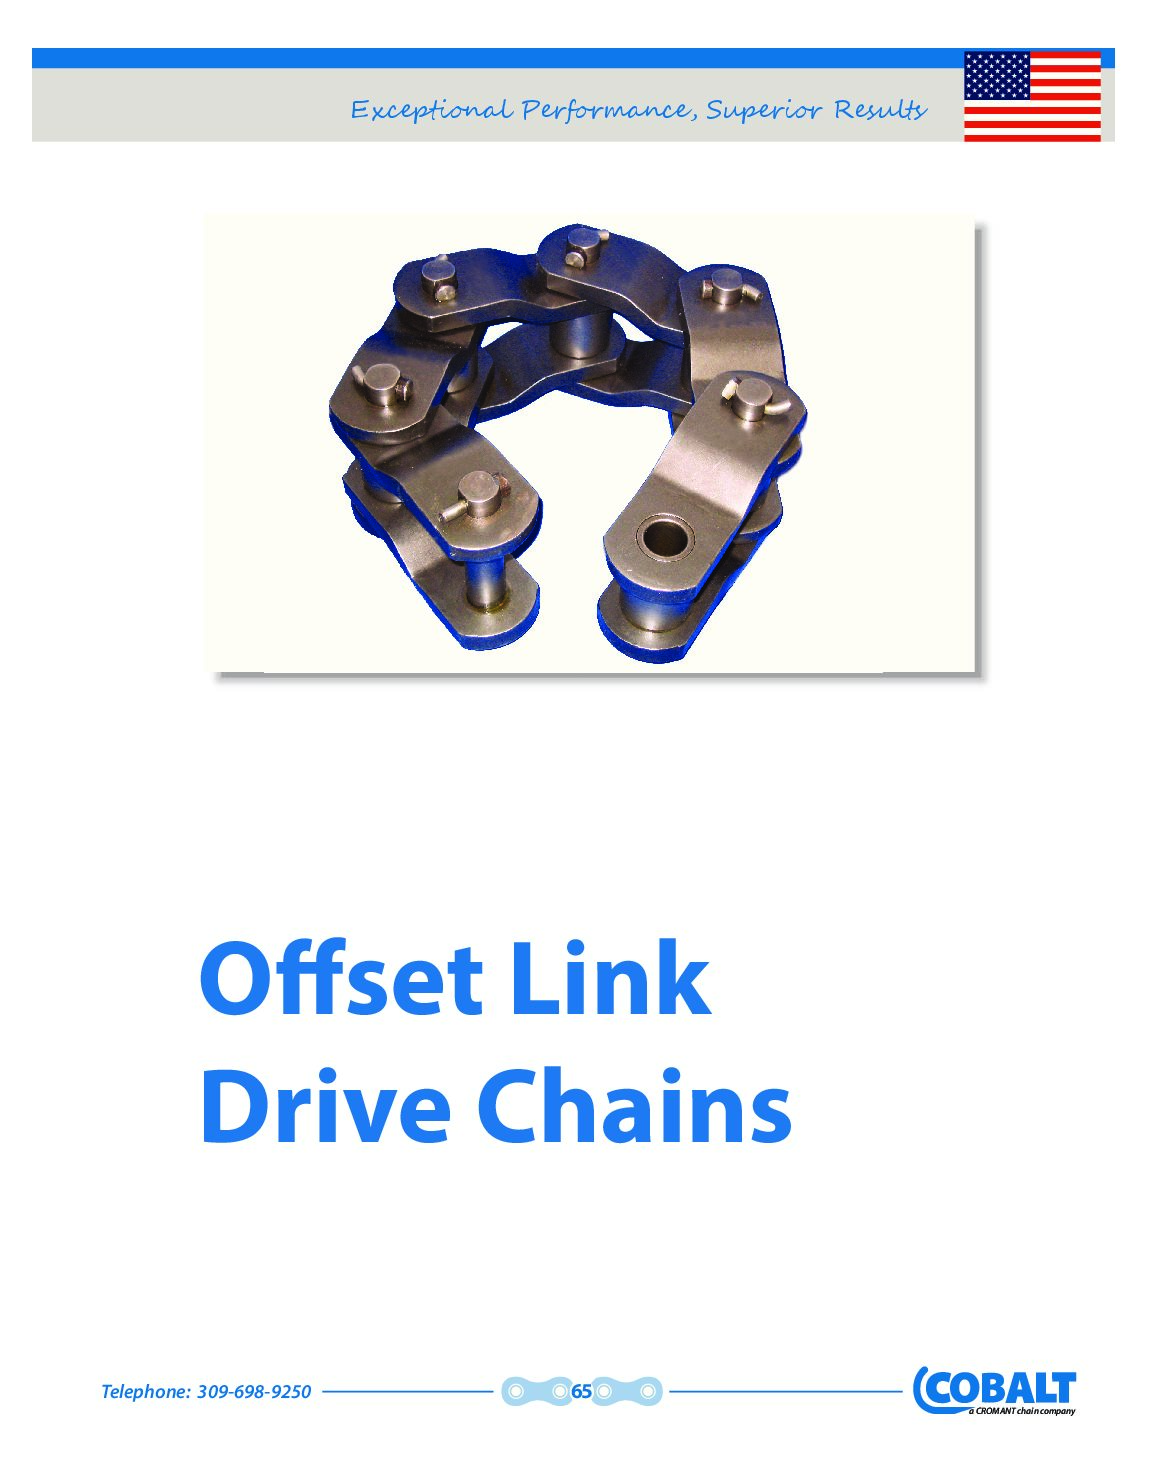 Cobalt Chains